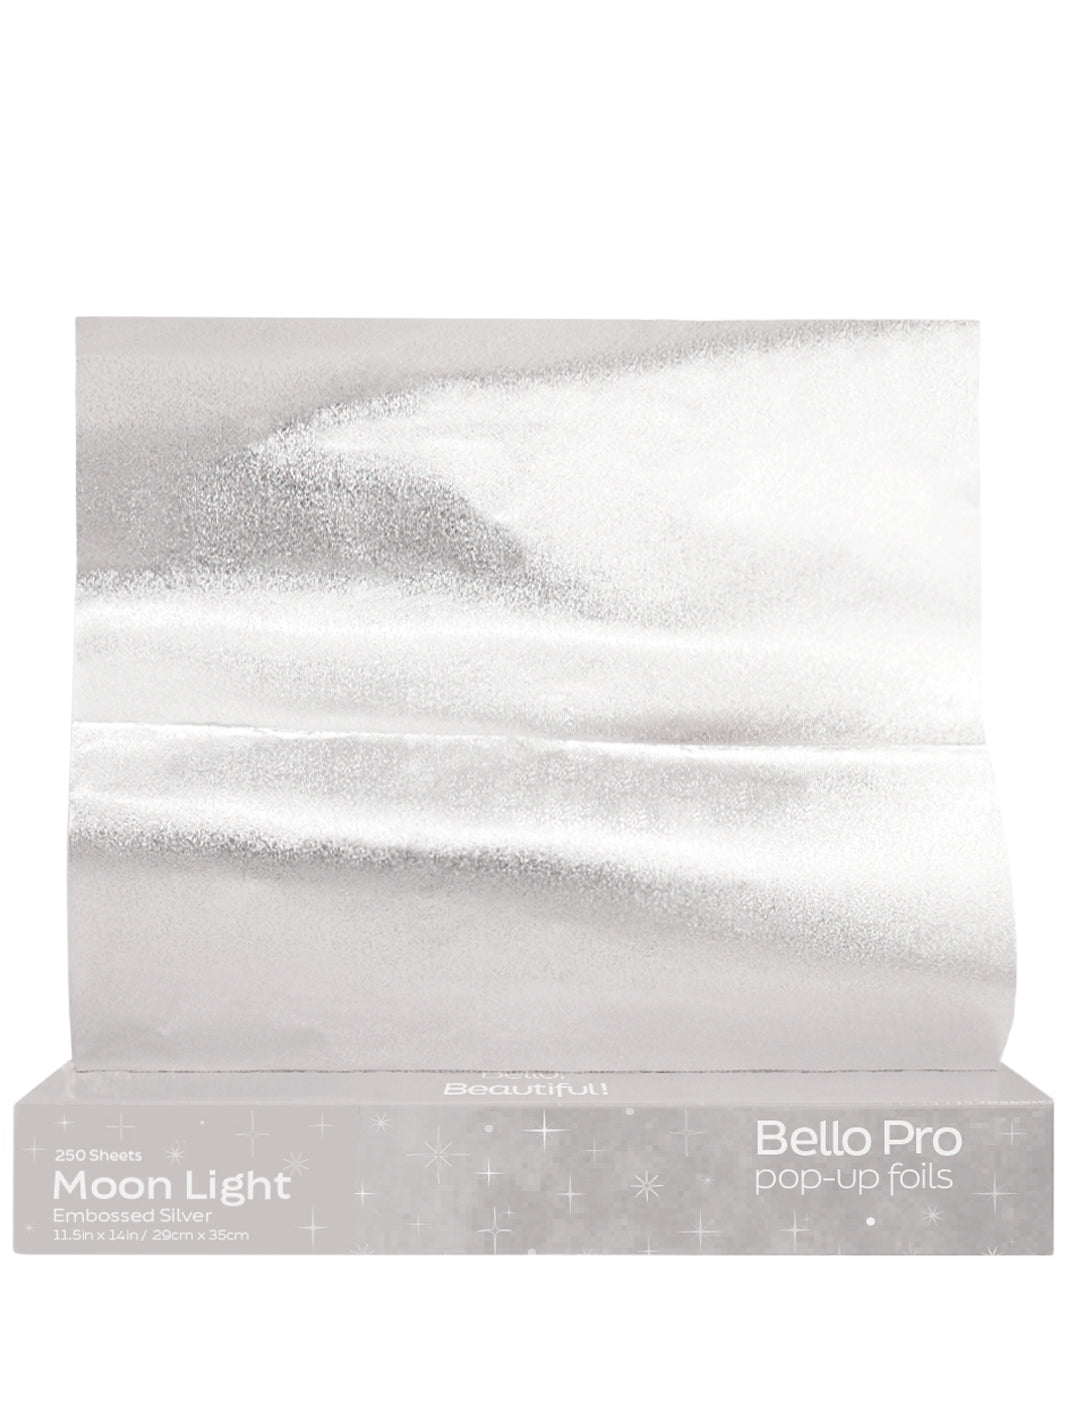 Bello Pro - Moonlight Pop-Up Foils